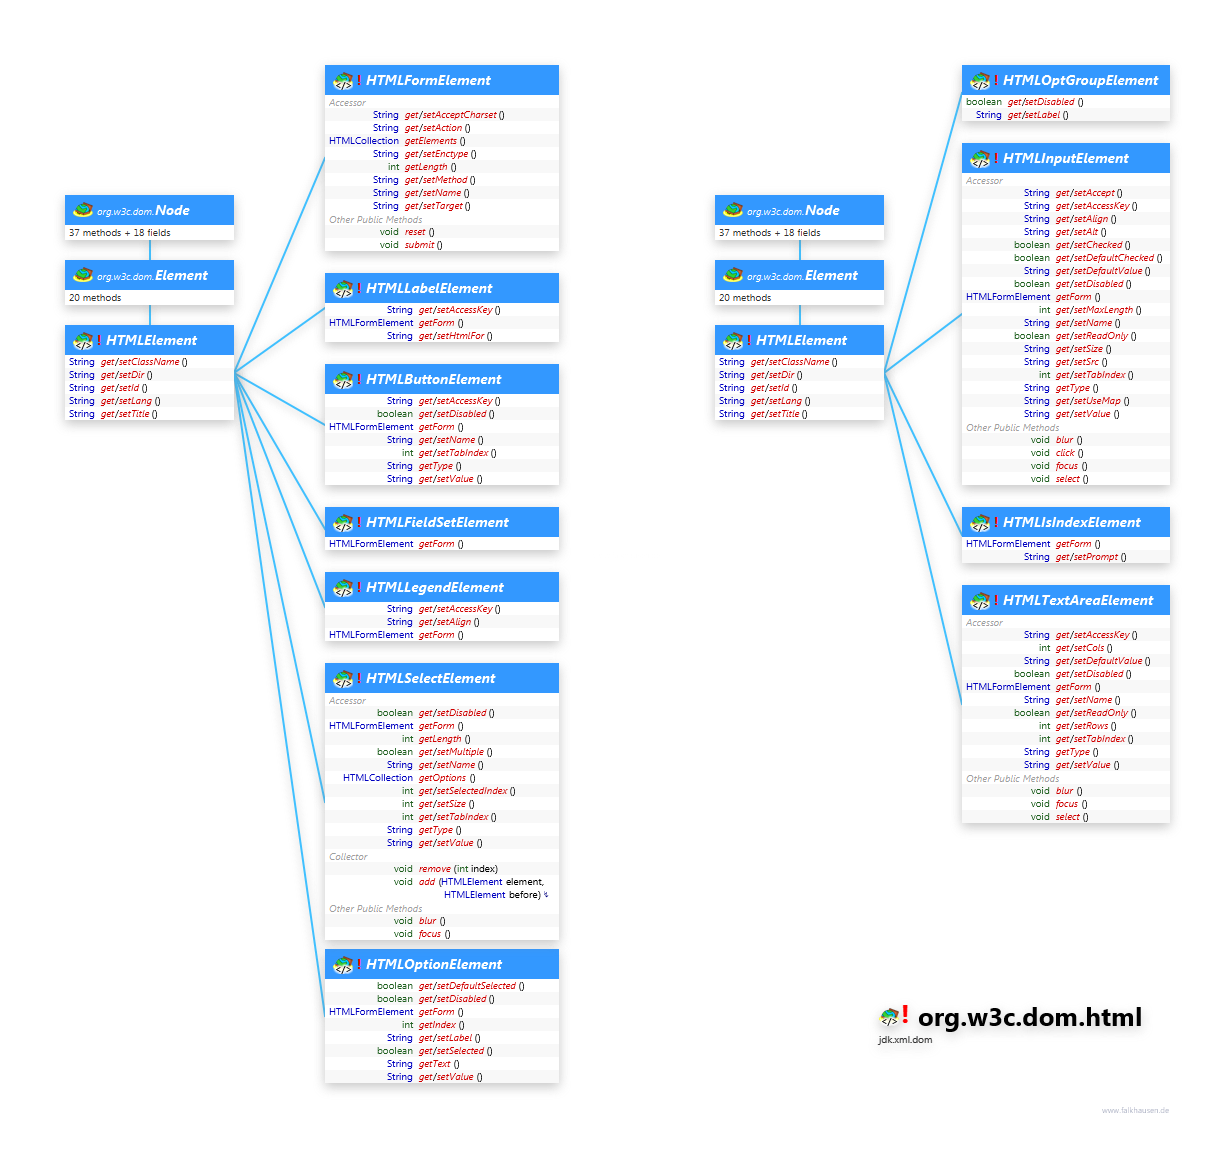 org.w3c.dom.html Formular Elements class diagram and api documentation for Java 10